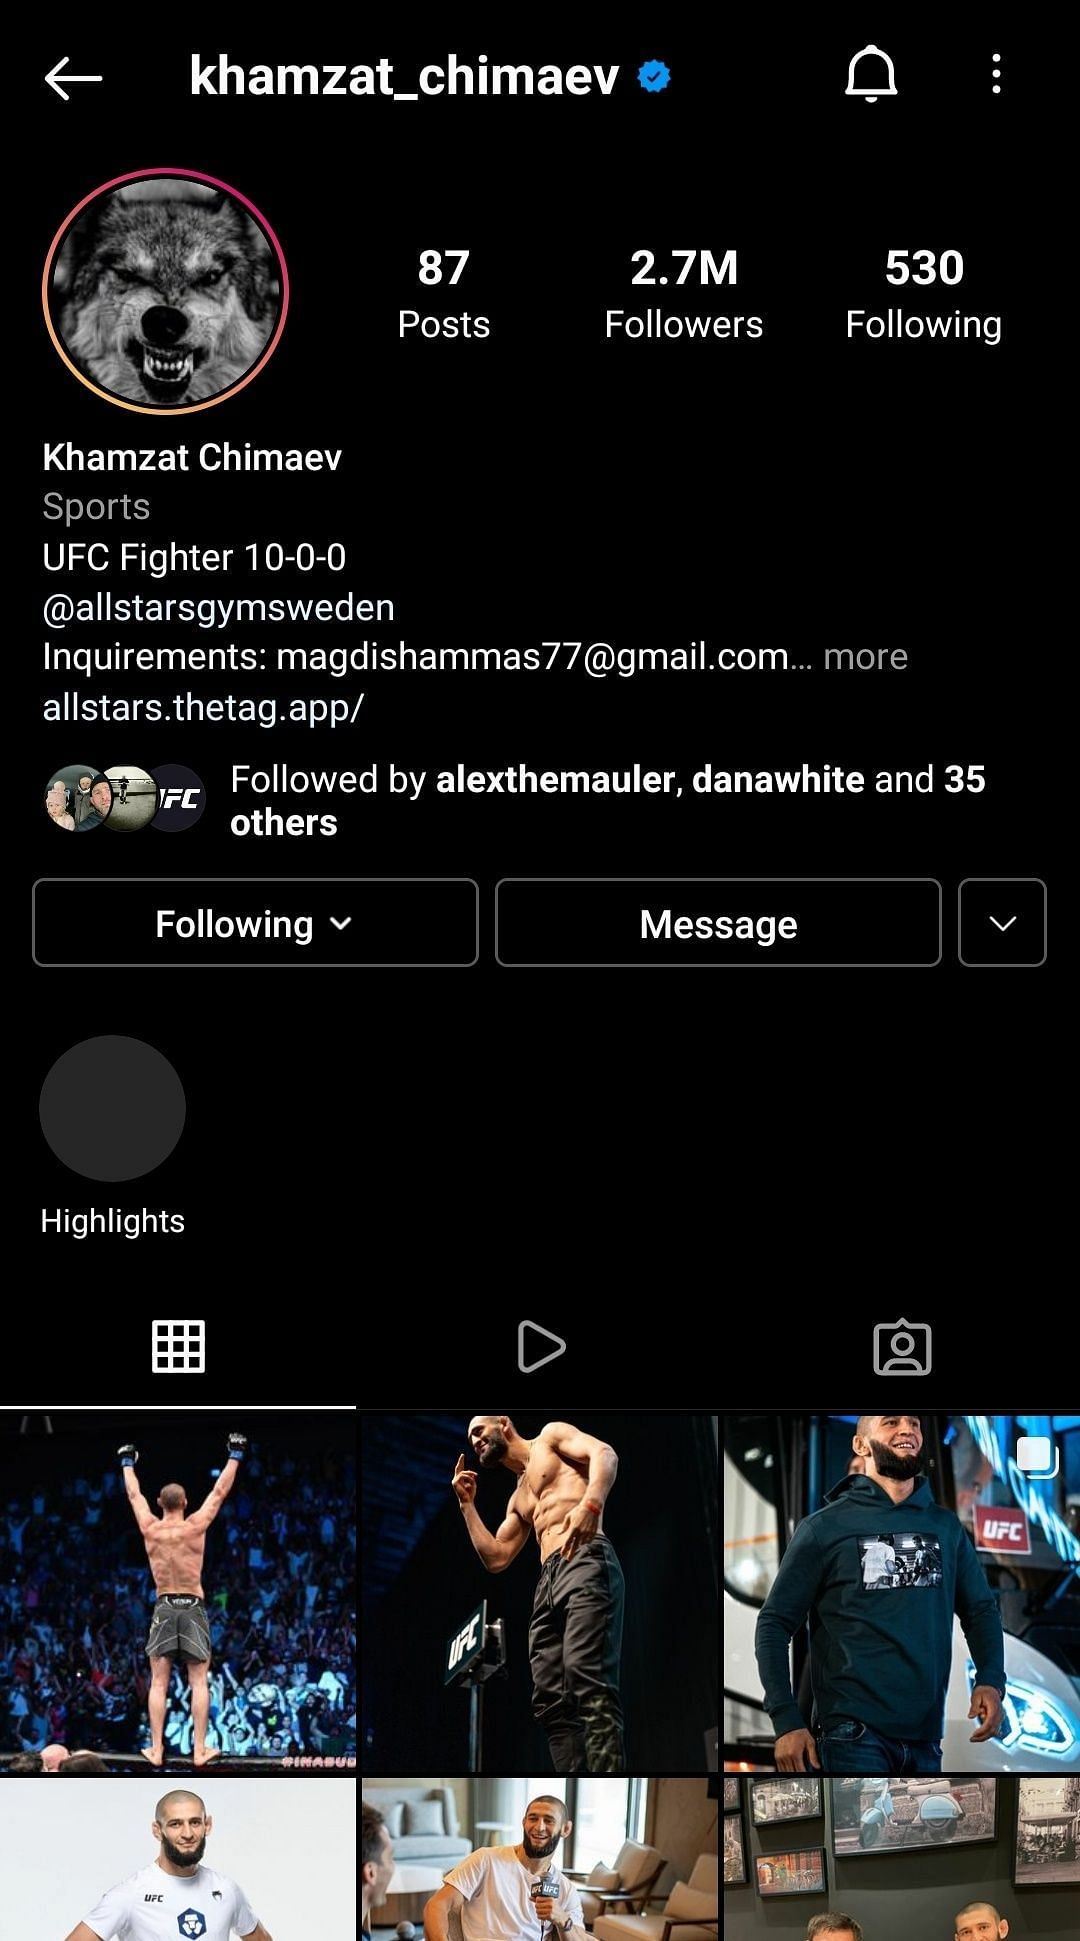 Khamzat Chimaev has 2.7 million Instagram followers